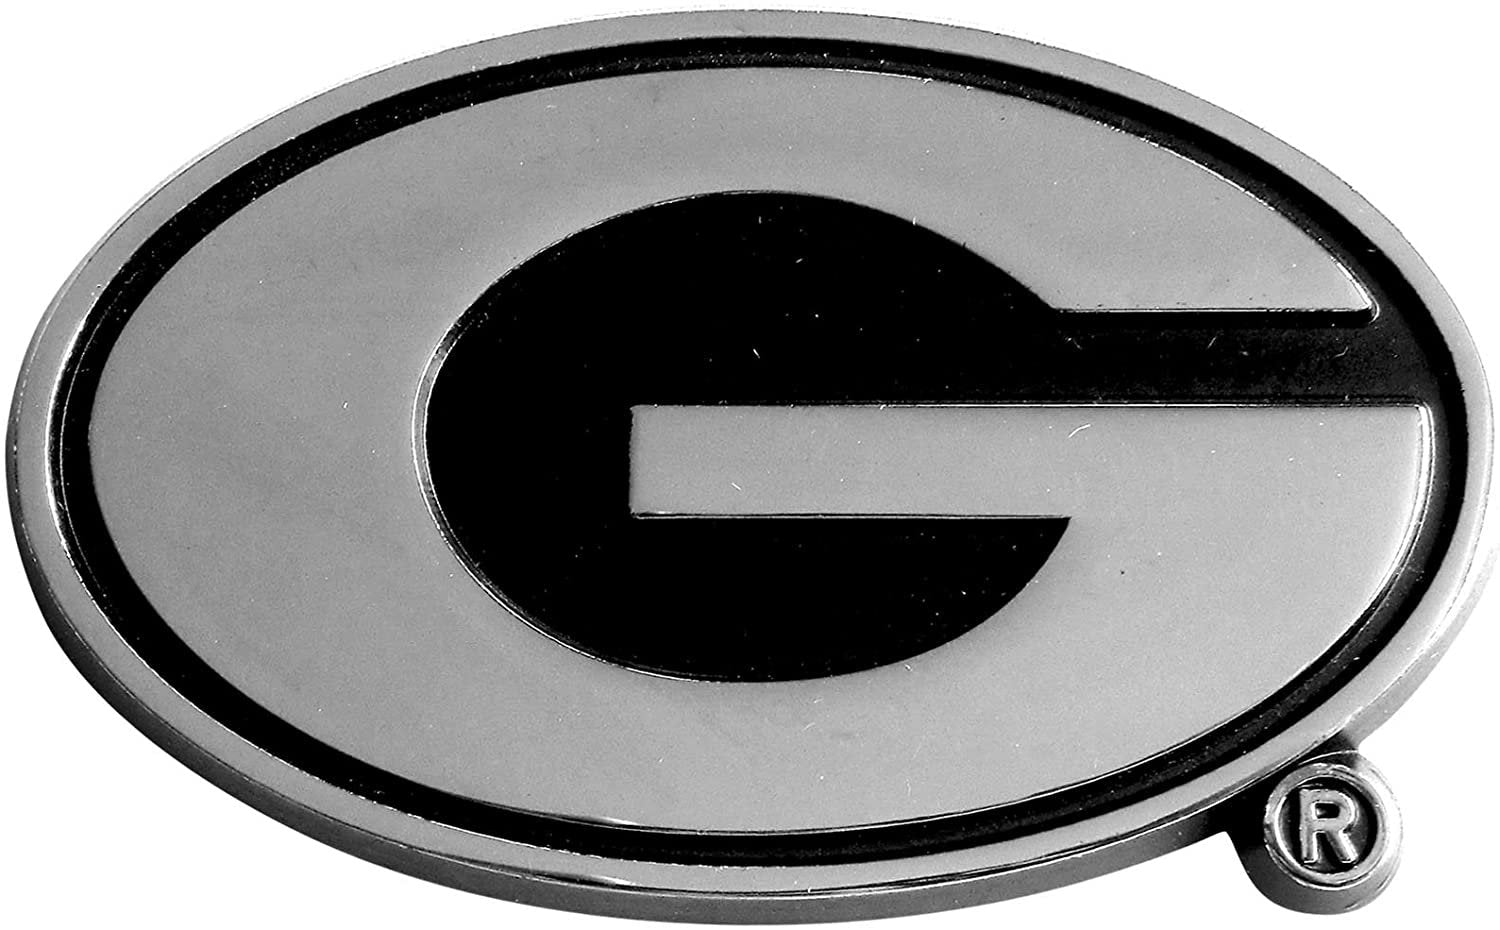 University of Georgia Bulldogs Premium Solid Metal Raised Auto Emblem, Shape Cut, Adhesive Backing